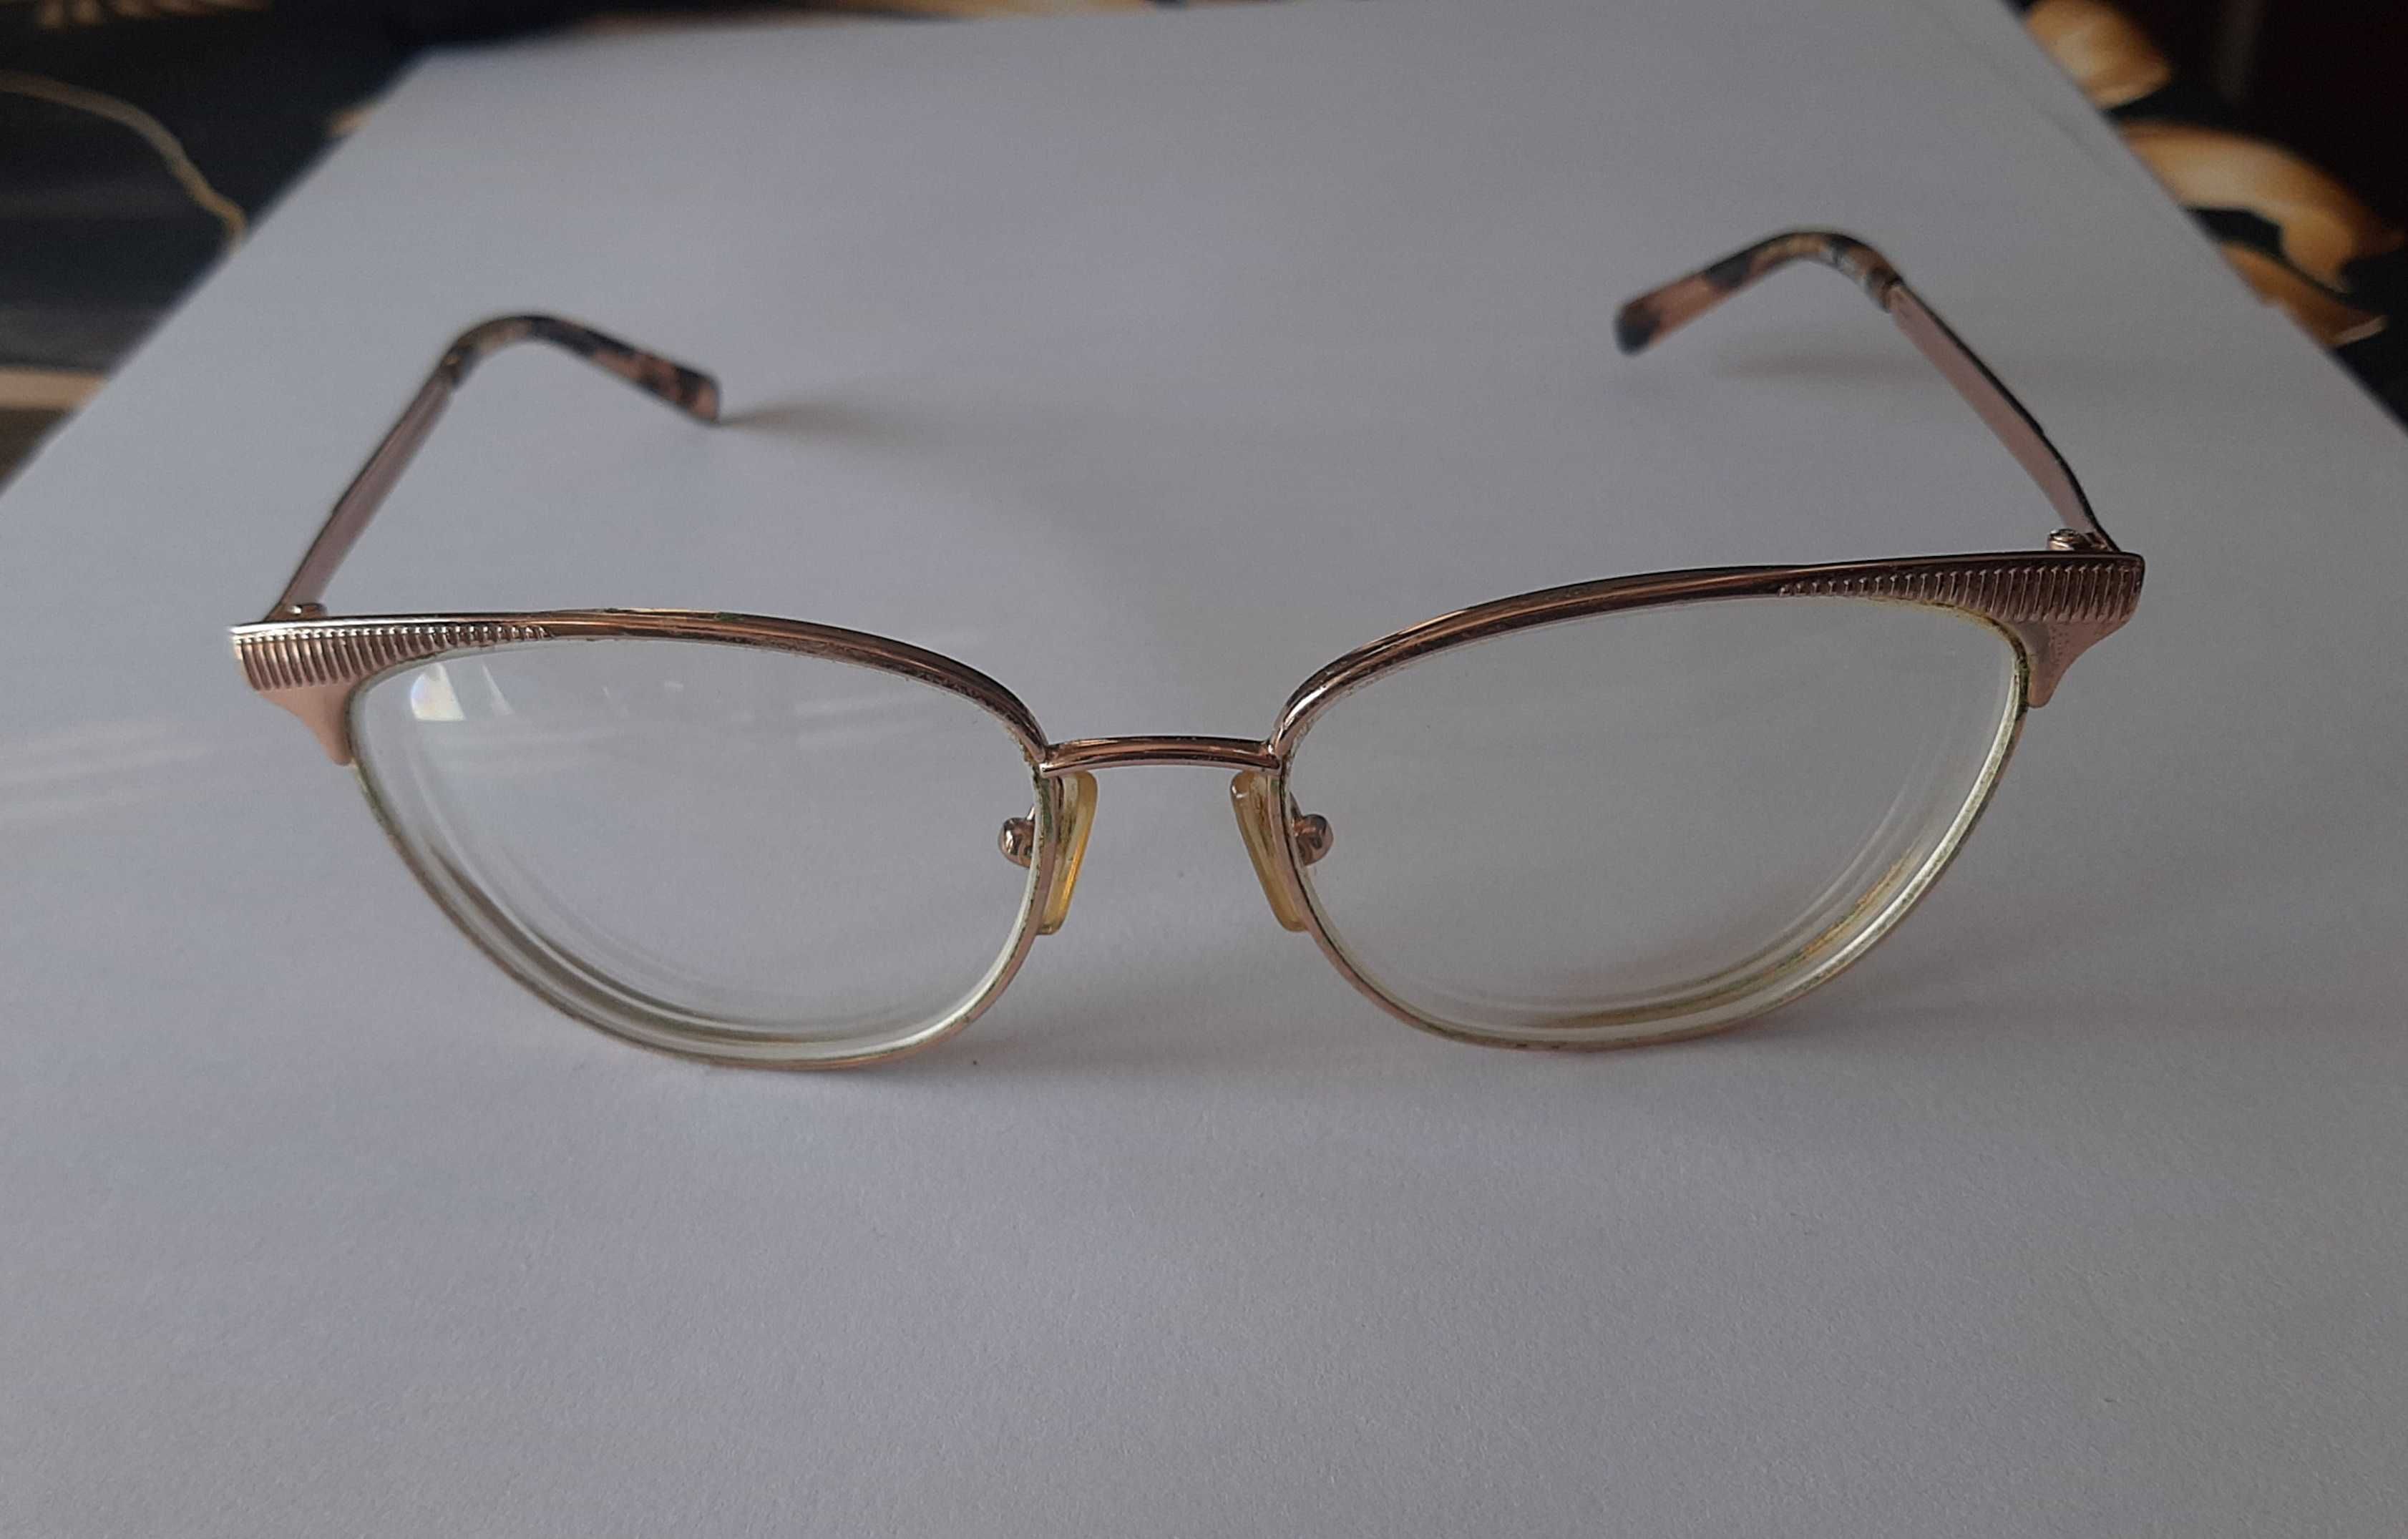 Michael Kors Nao oprawki okulary damskie - oryginalne - MK3018